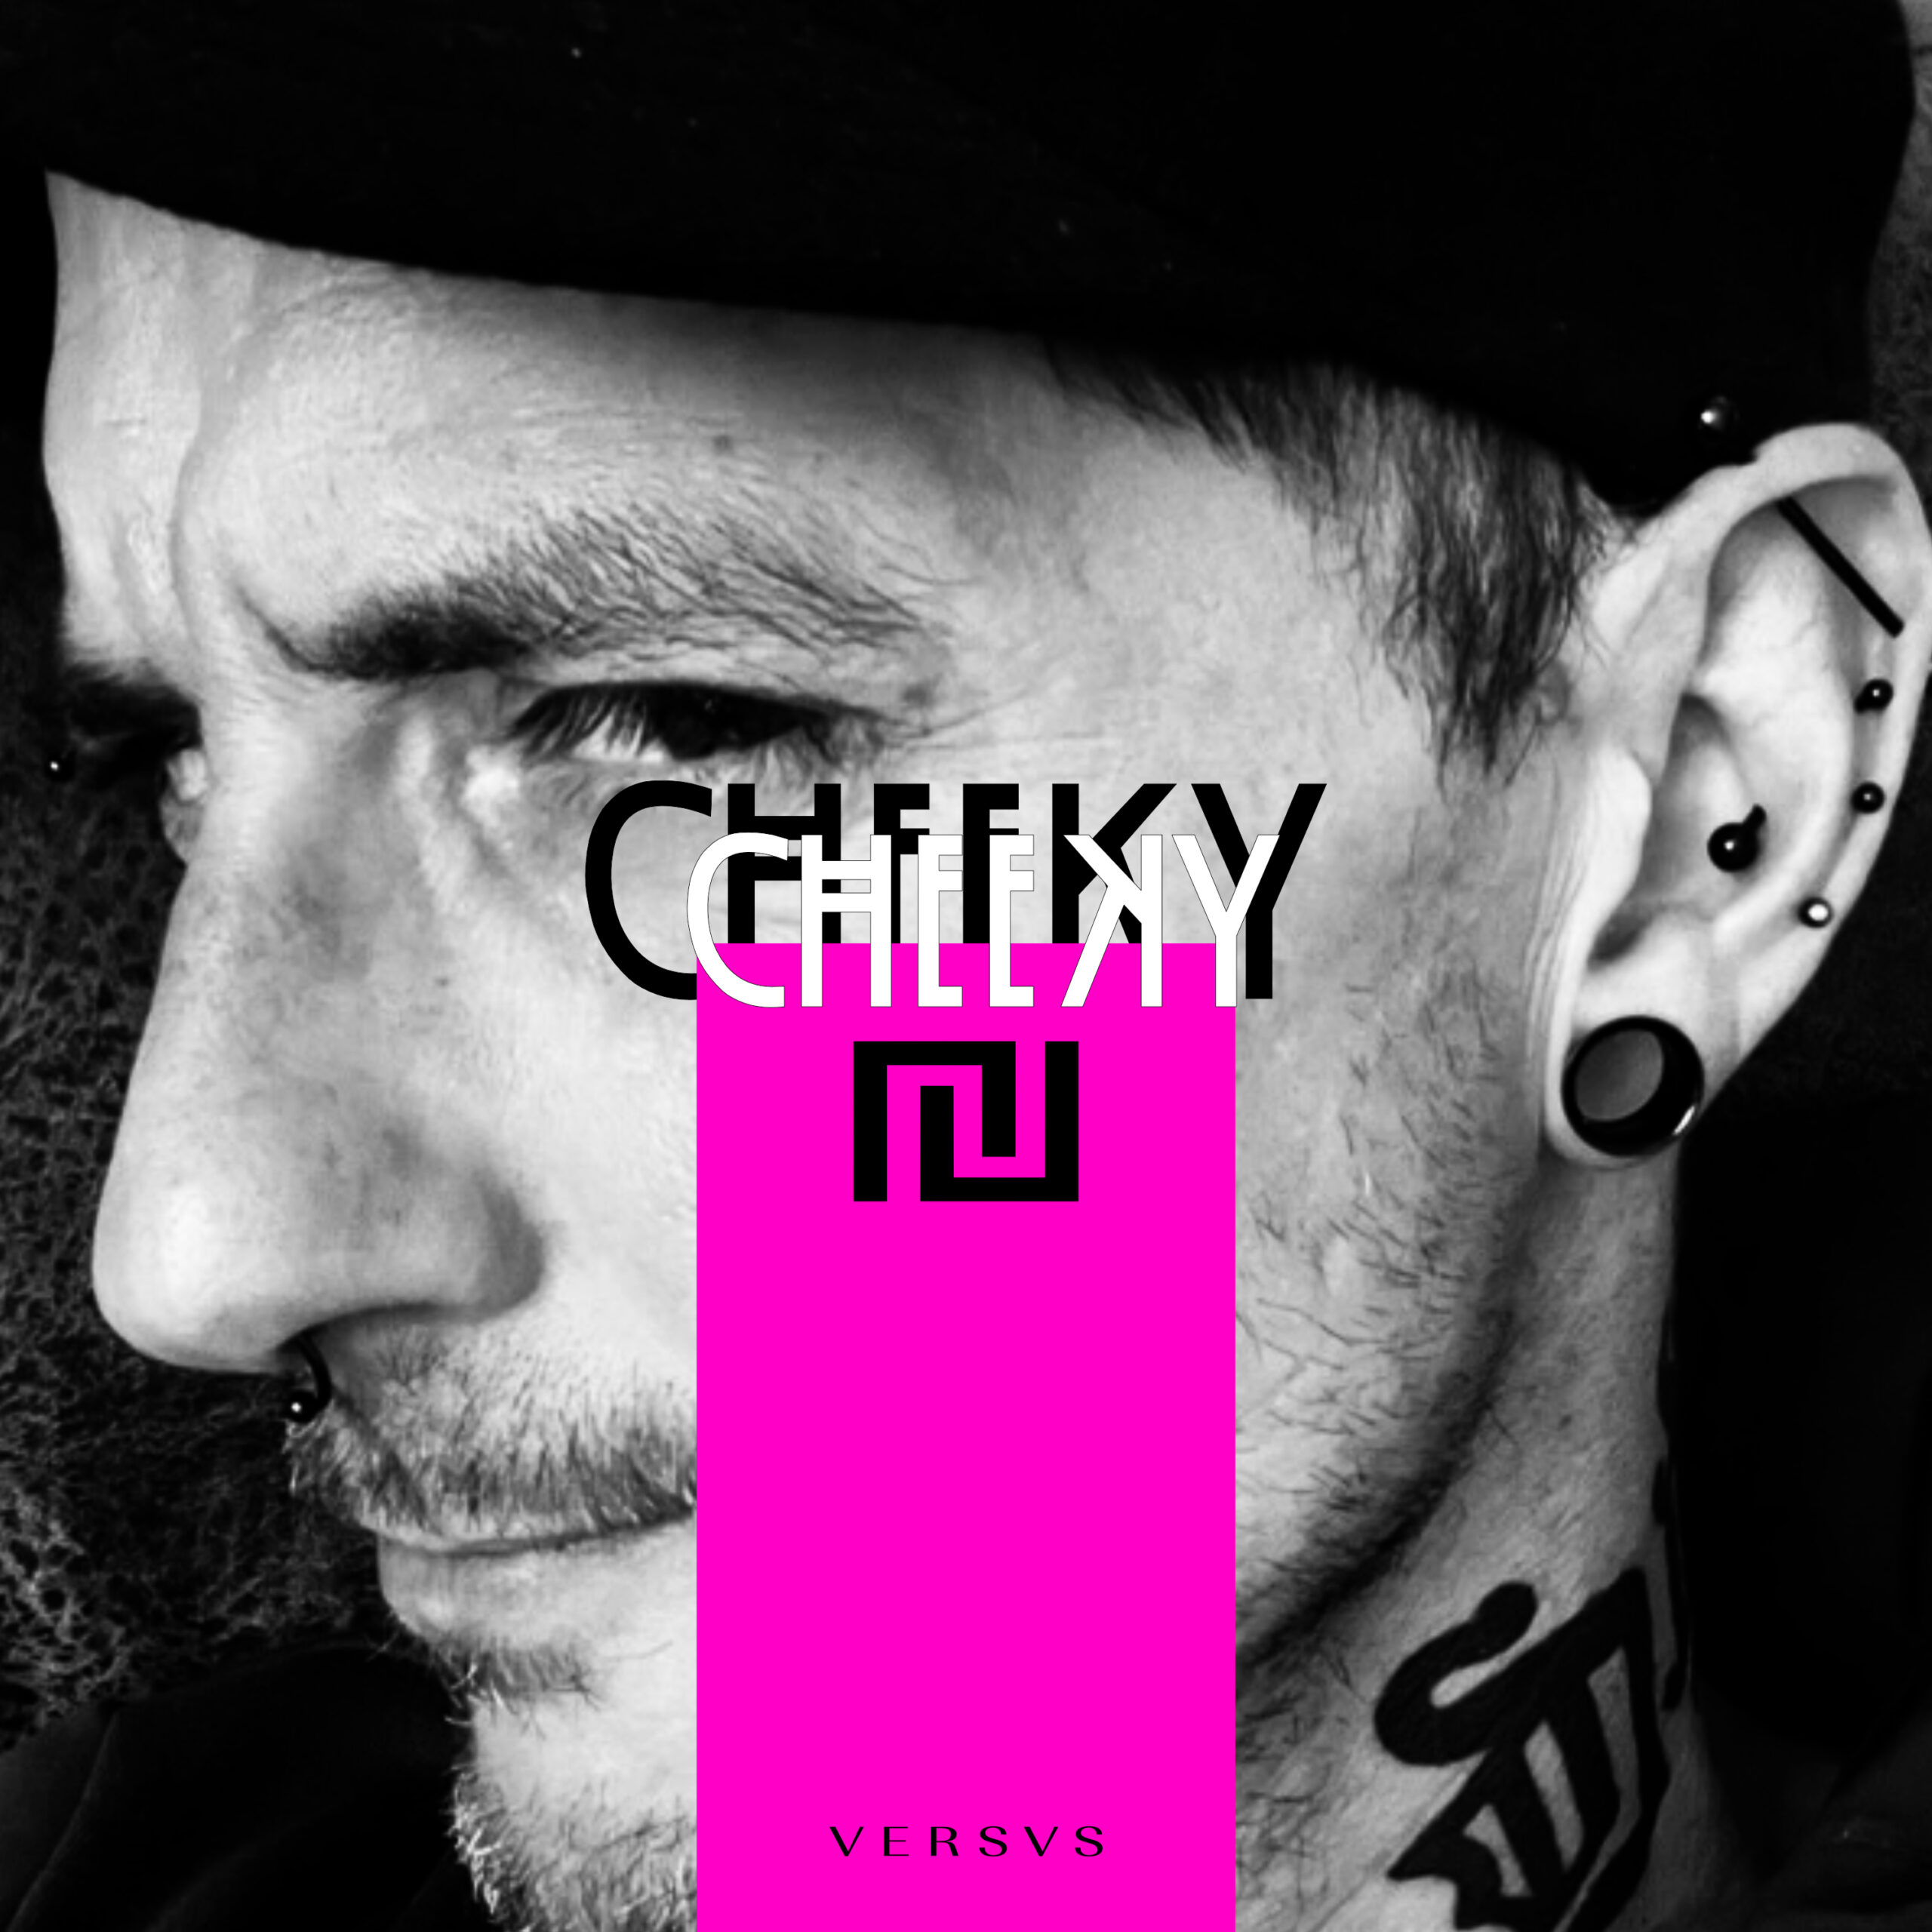 cheeky - new single by Tommy Warzecha | coming soon